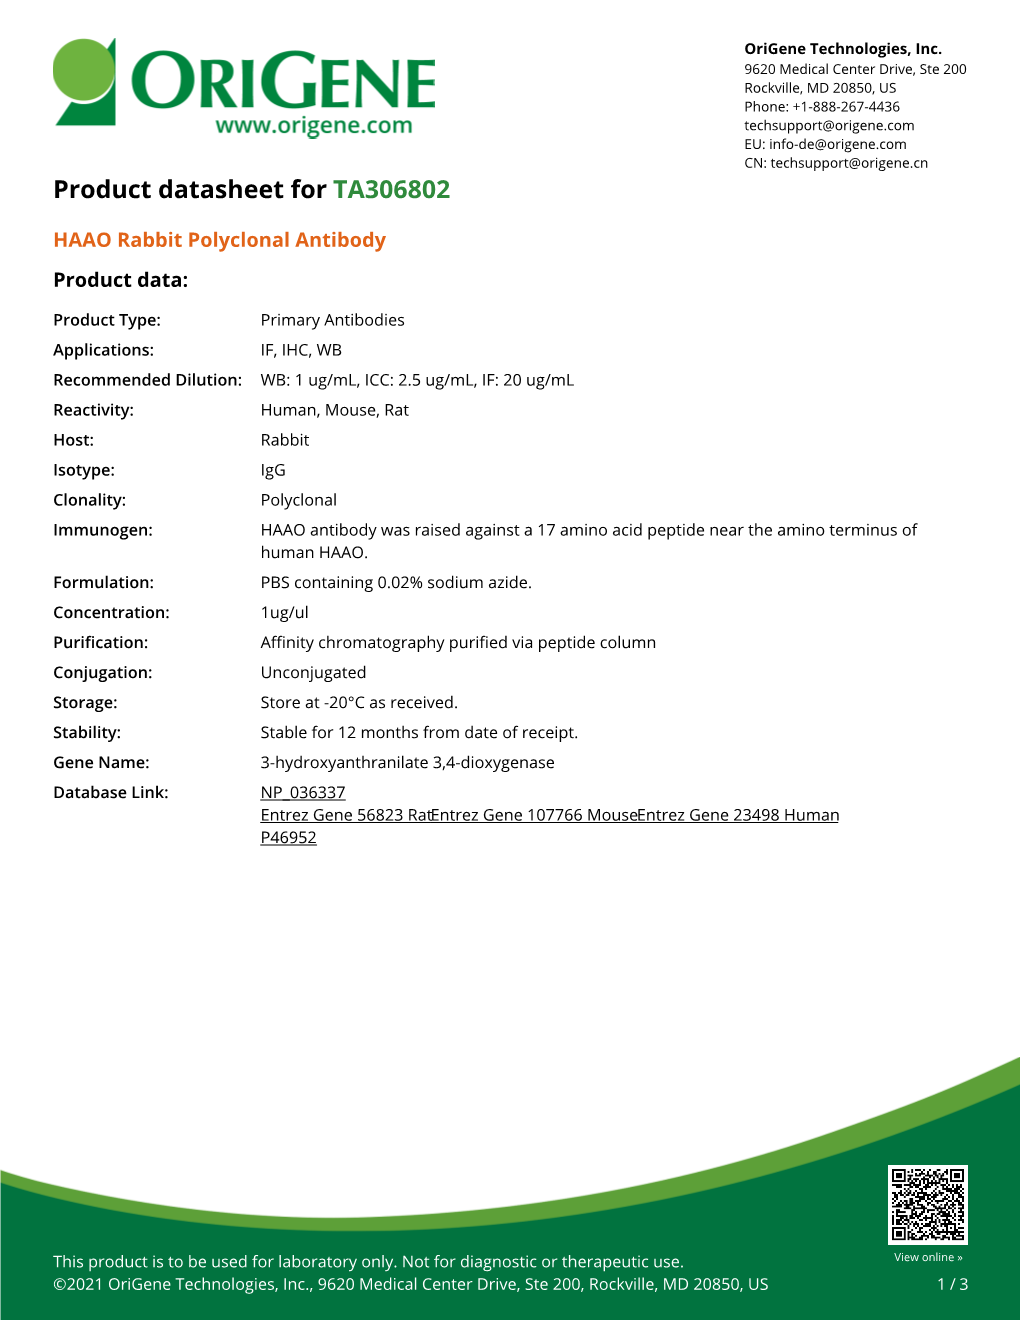 HAAO Rabbit Polyclonal Antibody – TA306802 | Origene